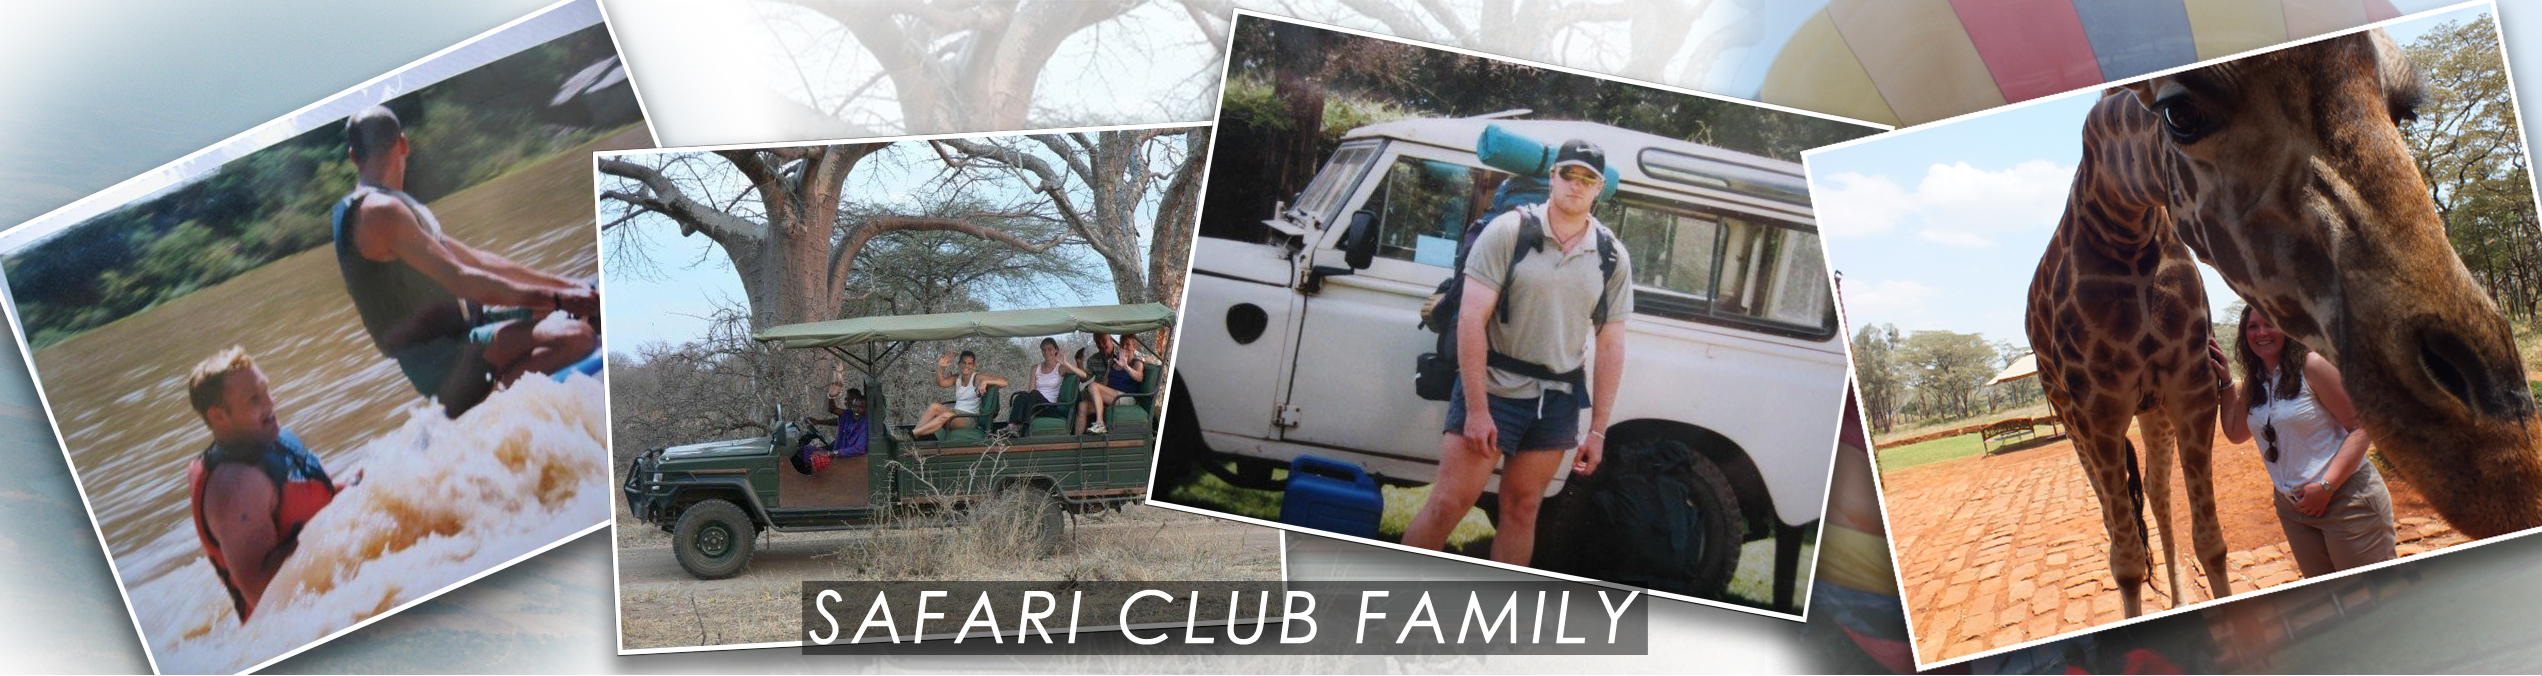 Safari Club Holidays & Tours - about us